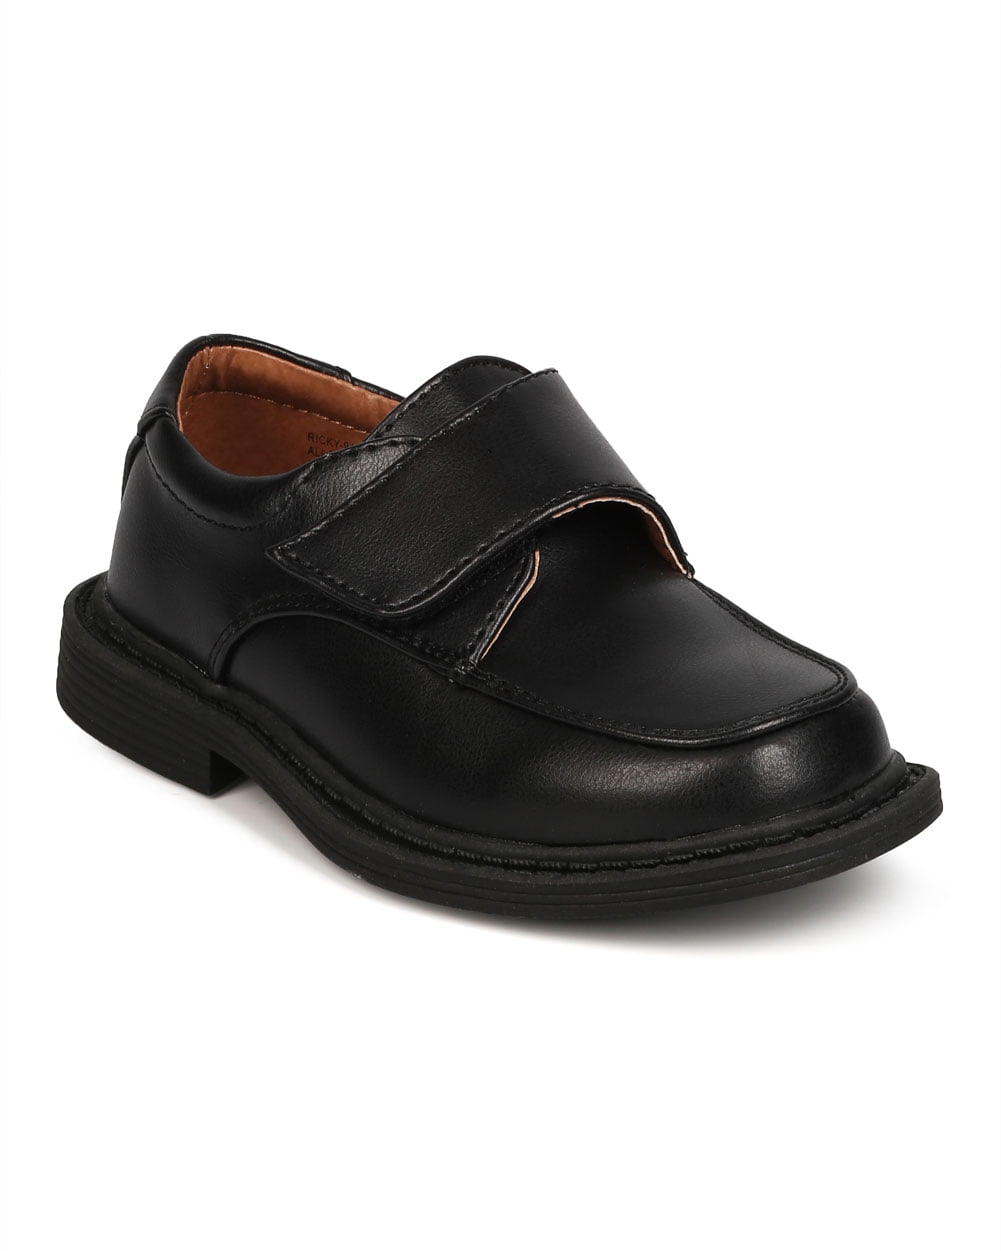 Black Toddler Boys Dress Shoes 